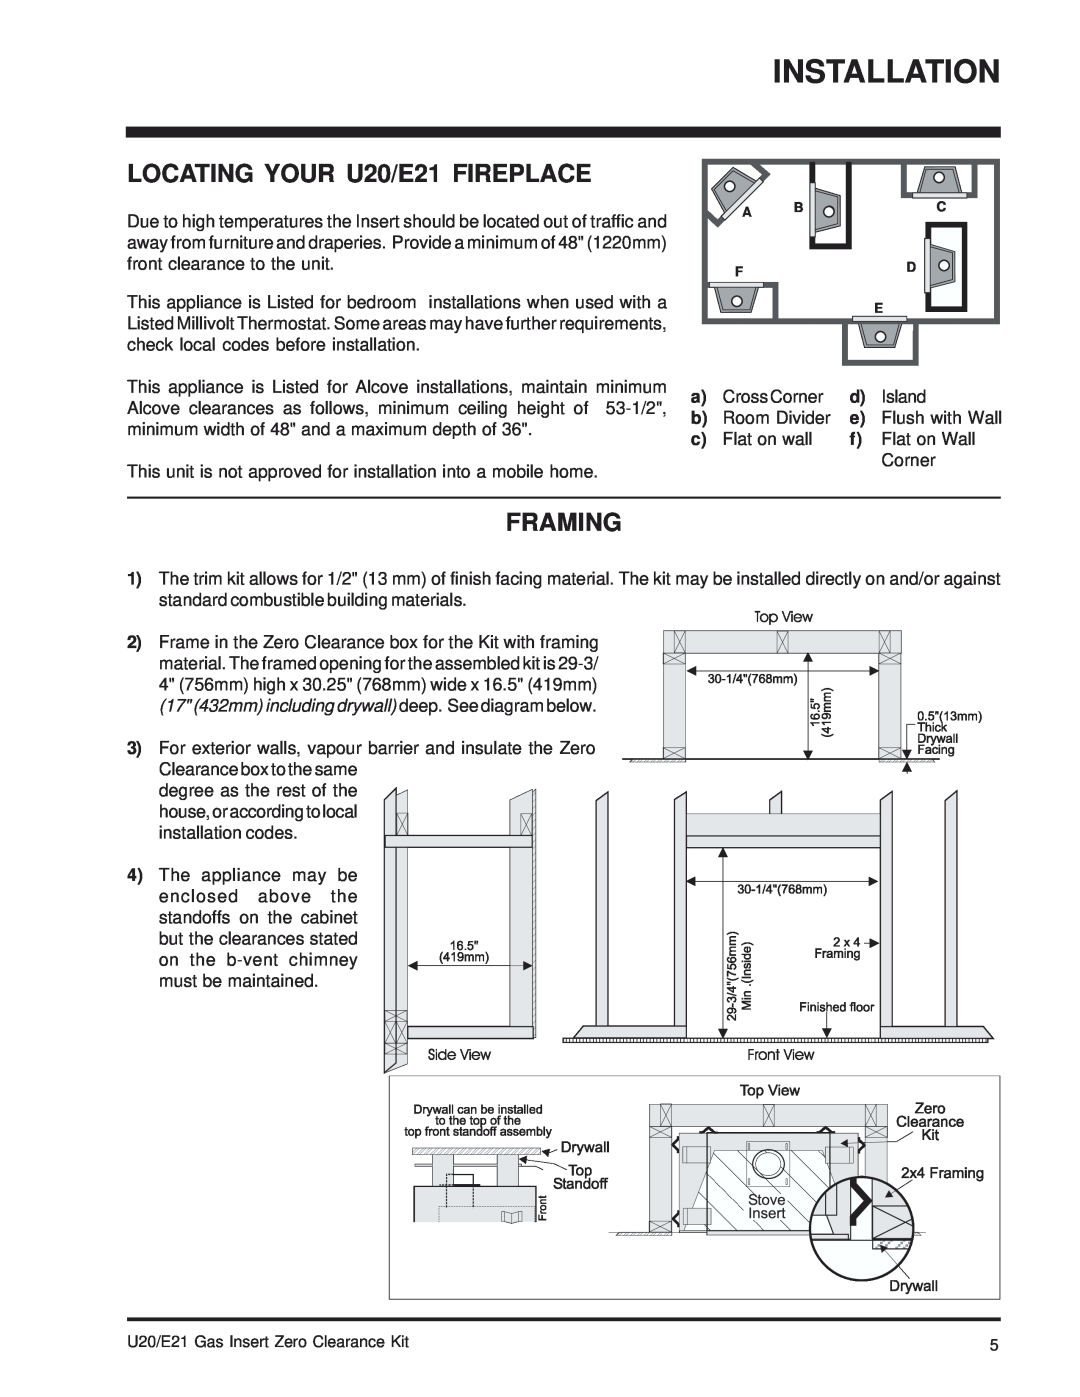 Regency installation manual LOCATING YOUR U20/E21 FIREPLACE, Framing, Installation 